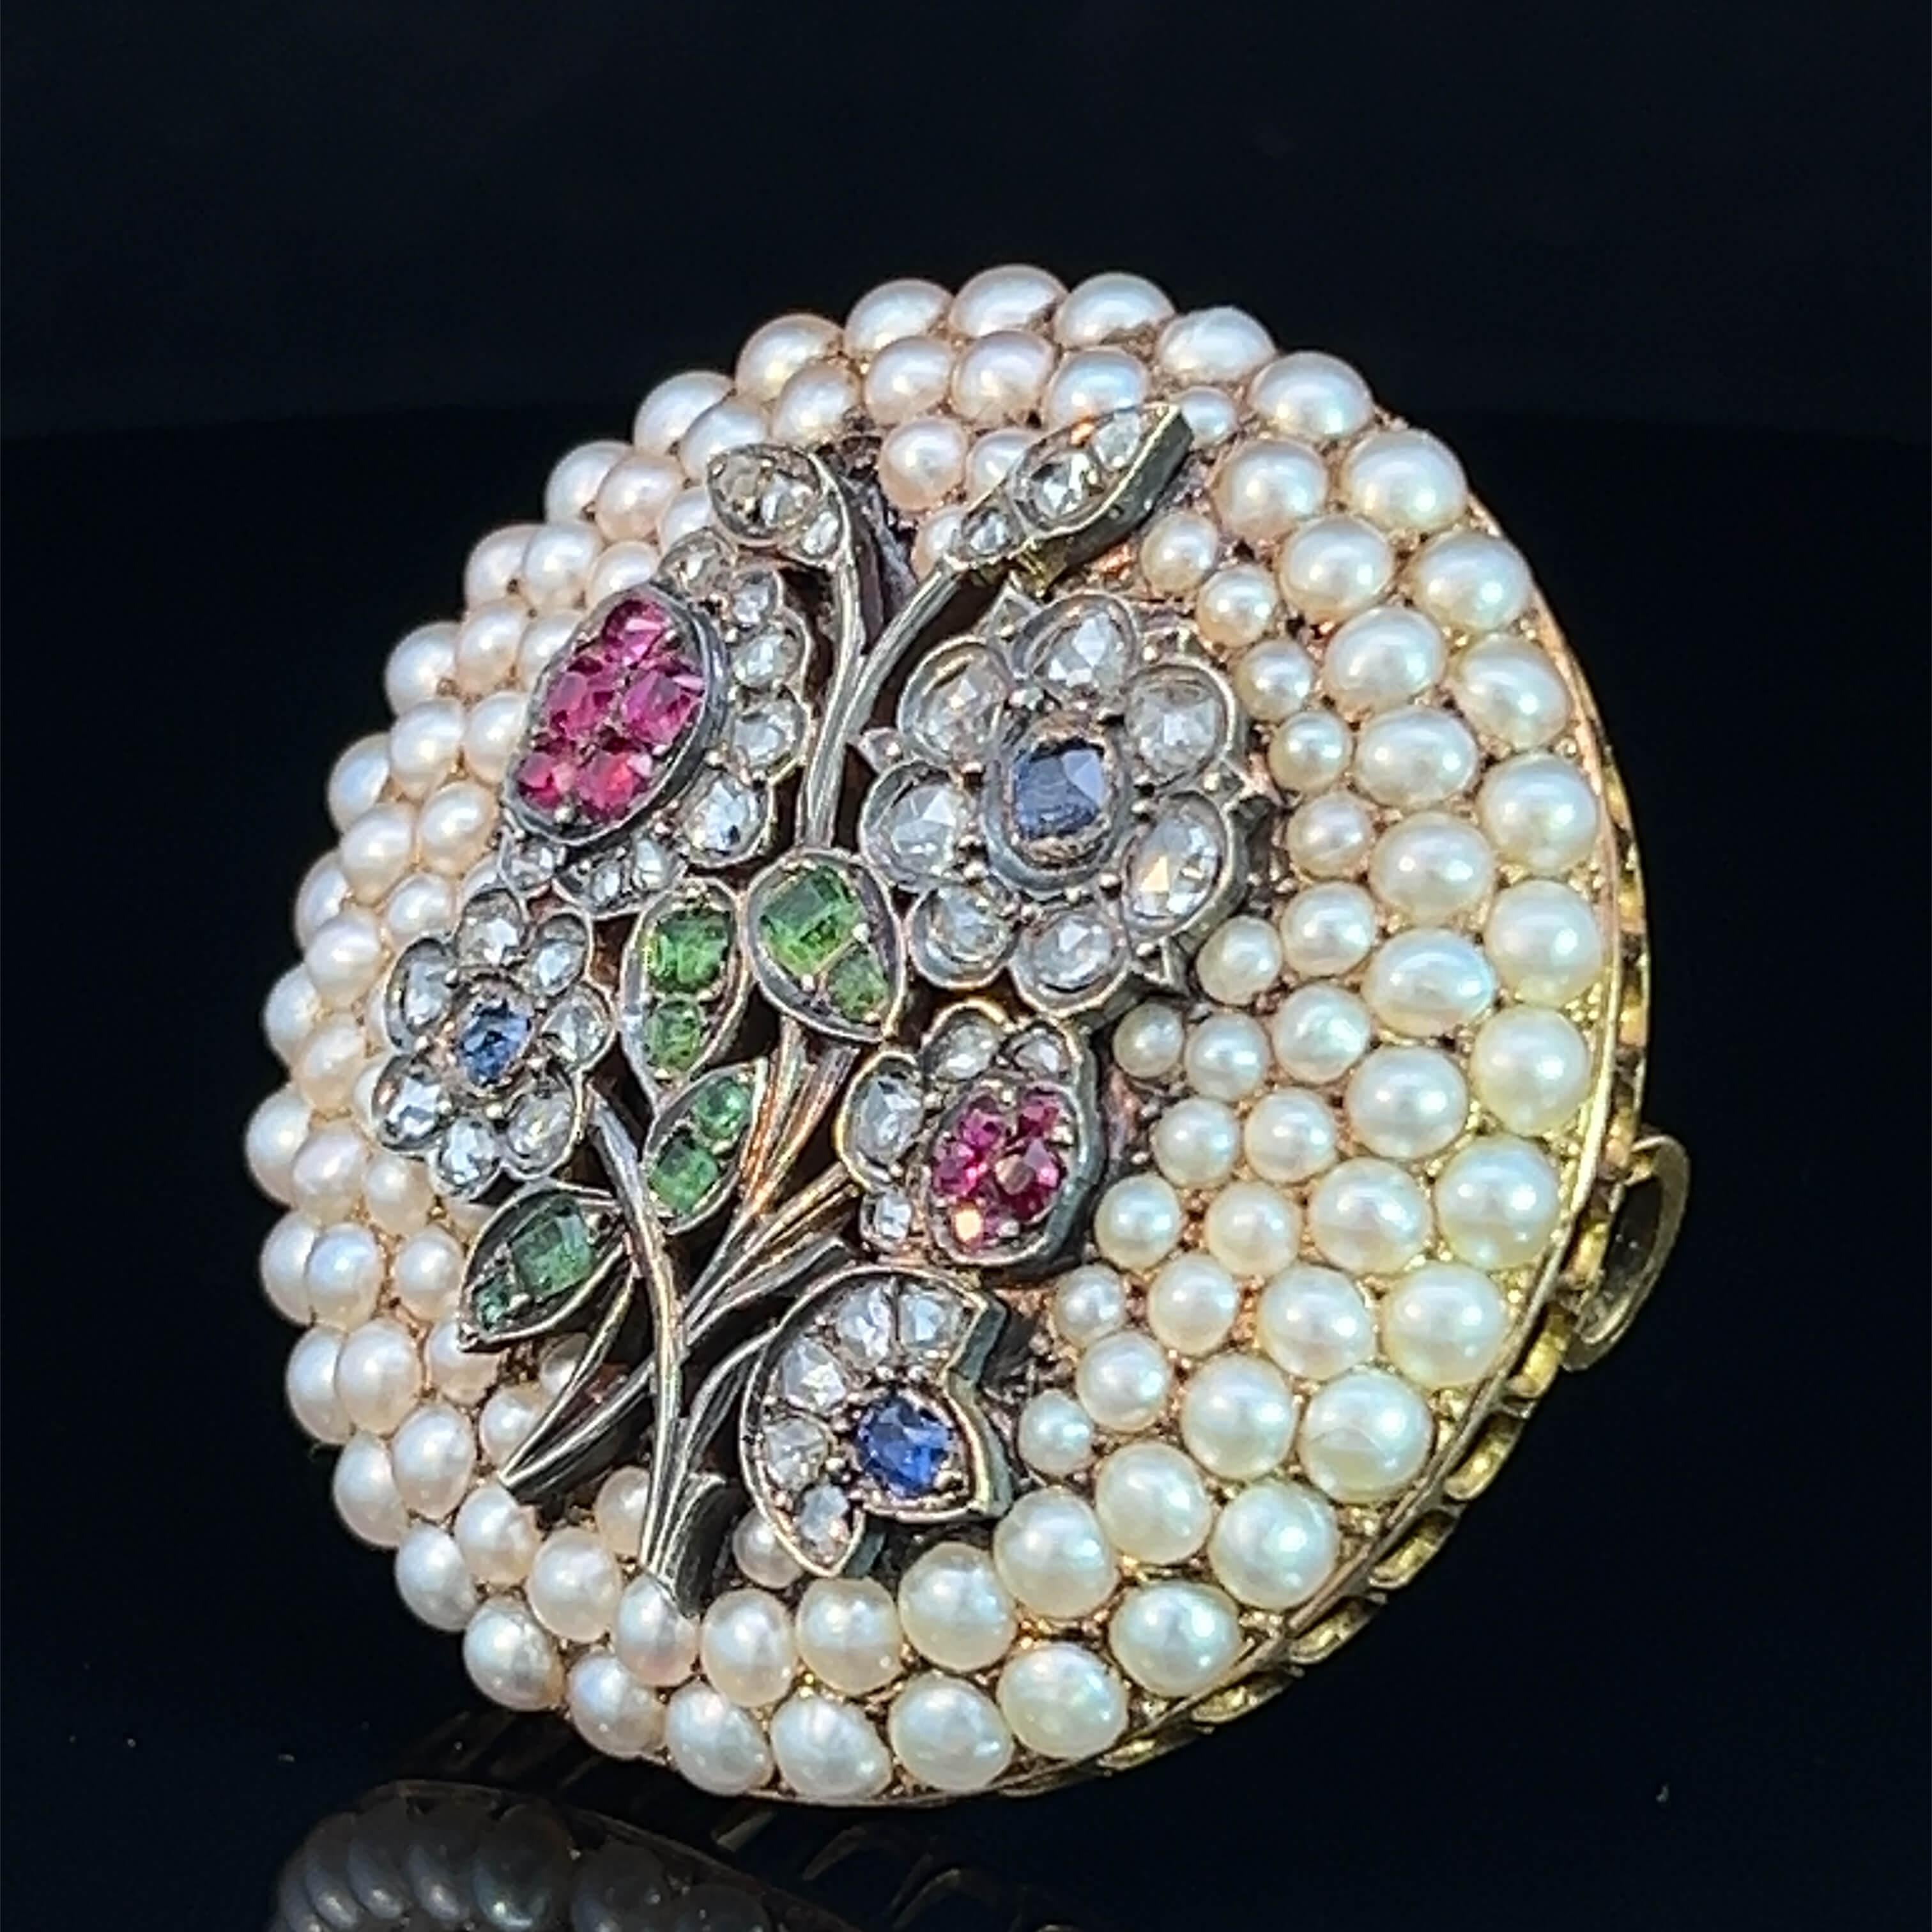 Belle Epoque Pearl & Gemstone Bouquet Brooch Circa 1900 - French Hallmarked For Sale 4